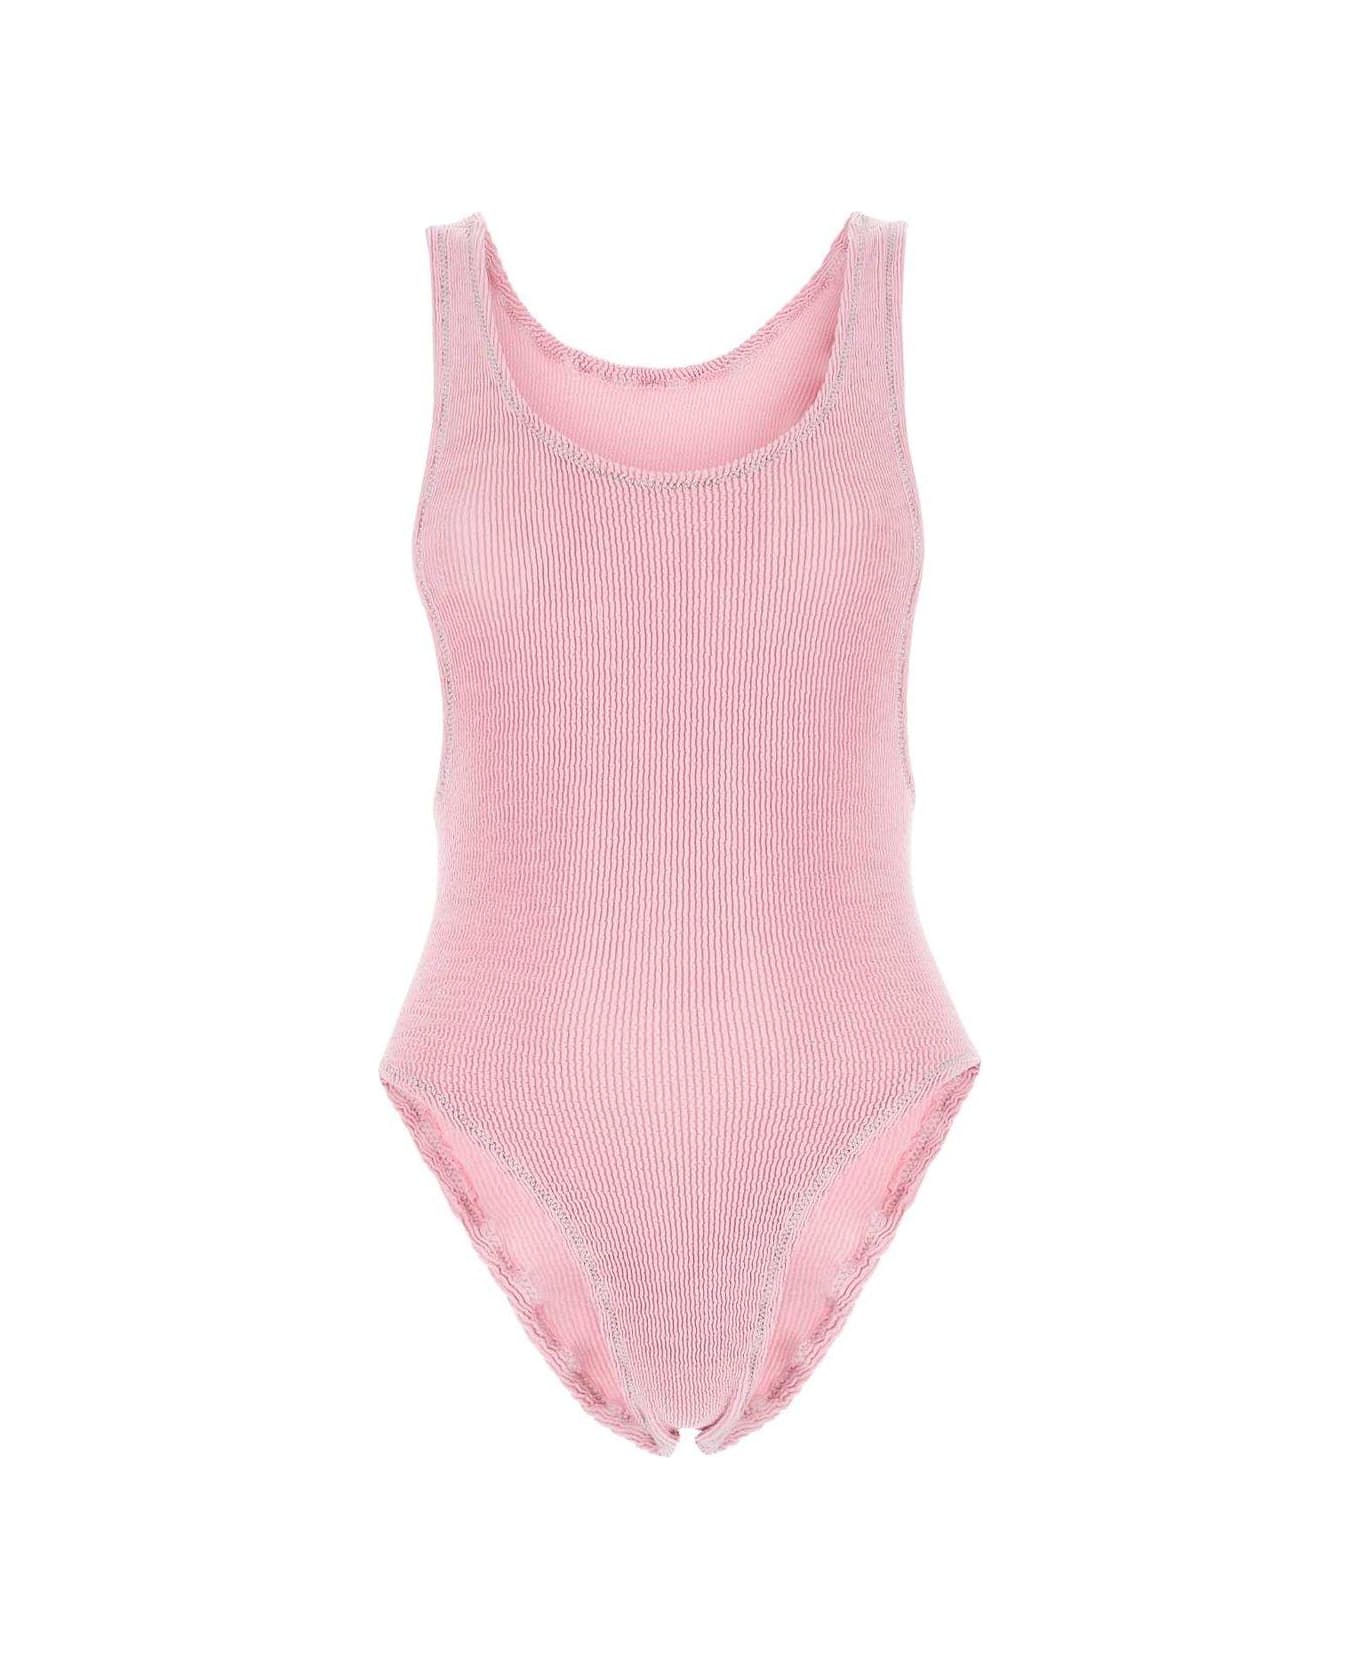 Reina Olga Ruby Stretch Design Sleeveless Swimsuit - Non definito ワンピース